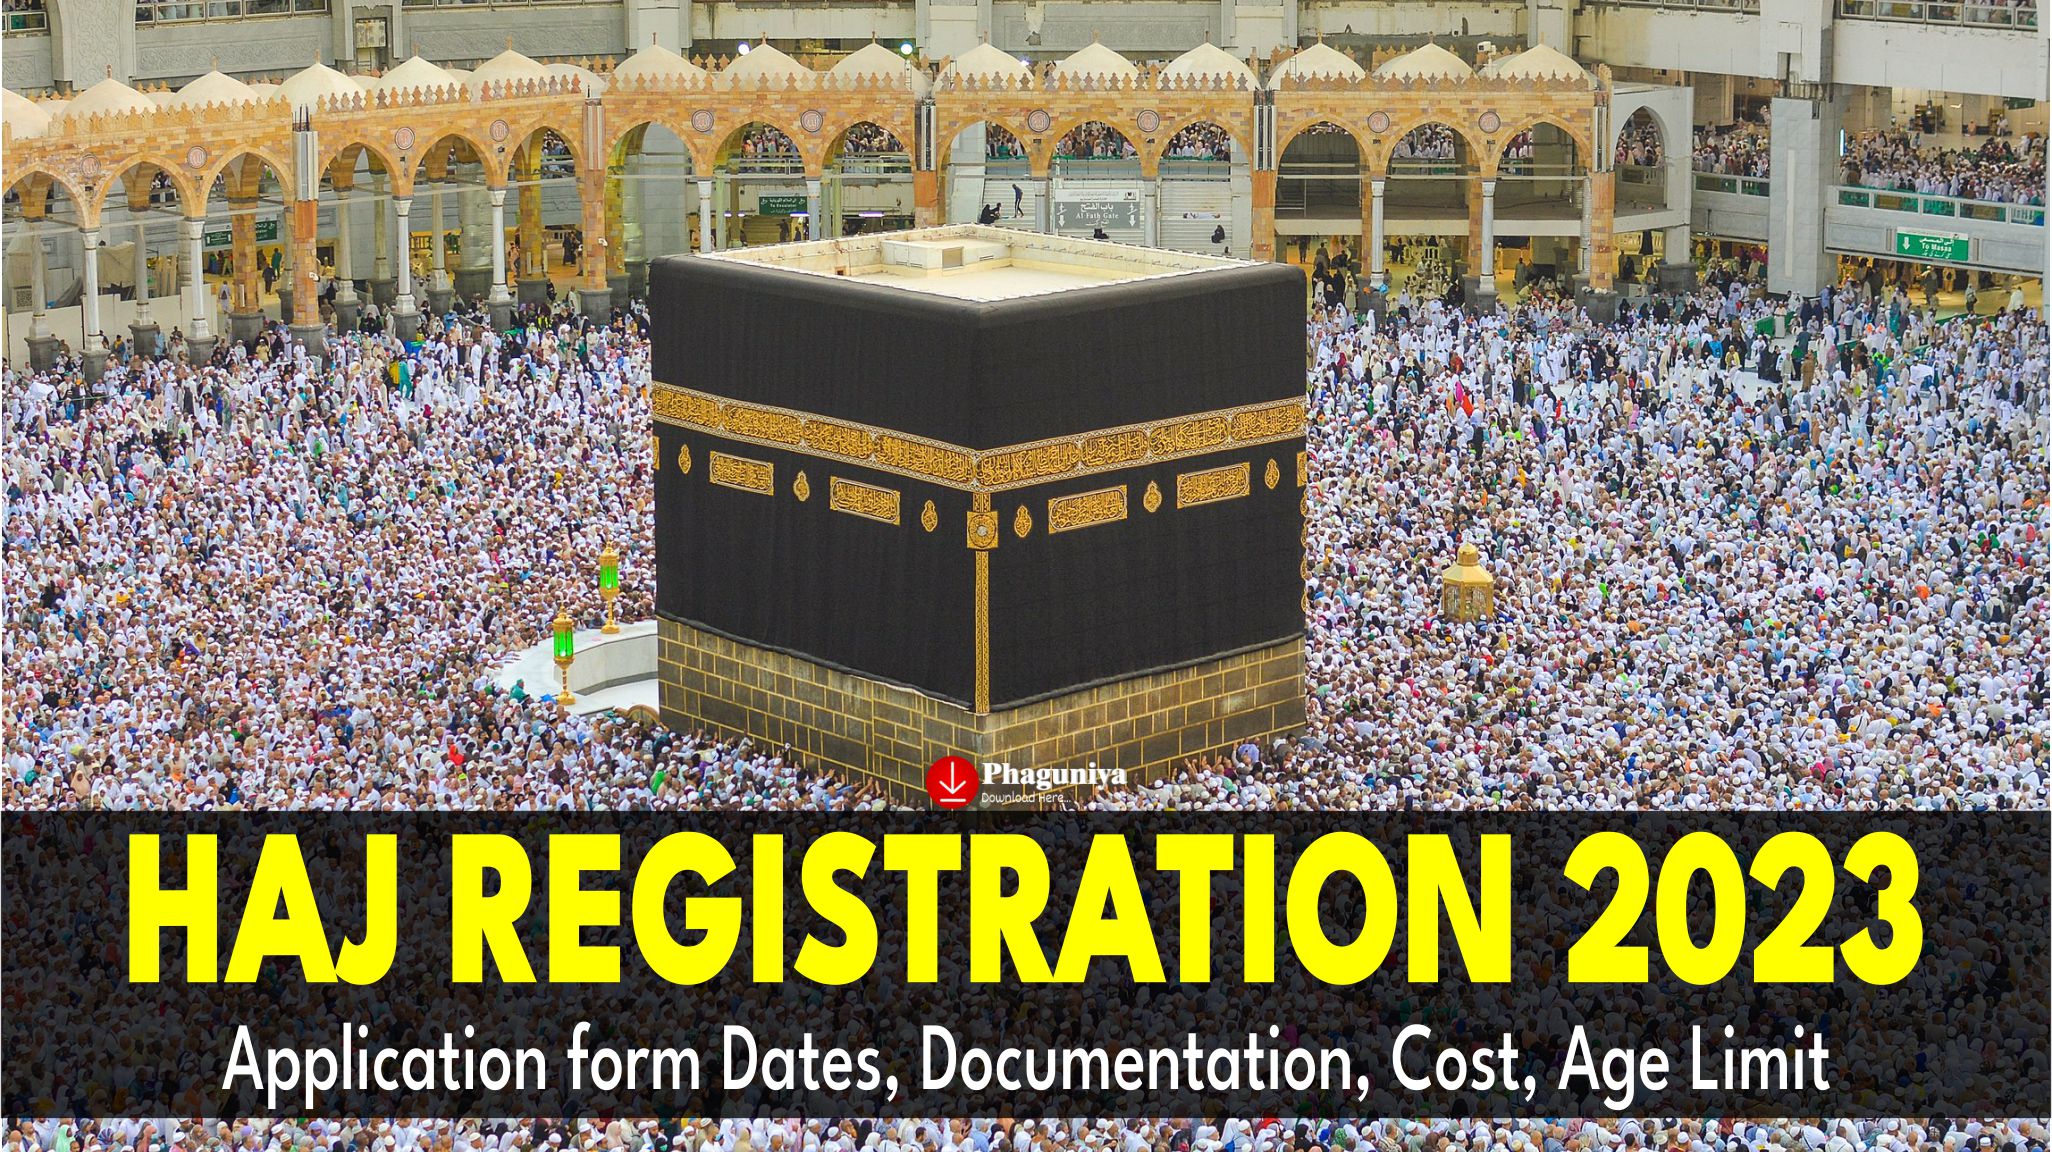 Haj Registration Dates 2023, How to register for Haj 2023, Haj registration documents required, Haj registration fee, Haj vaccination requirements, Haj accommodation options, Haj travel packages, Haj registration, Haj 2023, Haj application process, Haj requirements, Haj eligibility criteria, Haj registration deadline, Haj Registration 2023, Haj Registration Dates 2023; hajj 2023 registration india, hajj 2023 registration date in india, hajj cost from india 2023, hajj 2023 price, haj committee of india 2023 total amount, hajj 2023 from india, hajj 2023 lottery, haj committee of India 2023, hajj cost from india 2023, hajj 2023 registration india, haj committee of india 2023 total amount, haj announcement 2023, haj committee of india login, haj committee of india latest news 2023, hajj 2023 age limit, www.hajcommittee.gov.in application form,